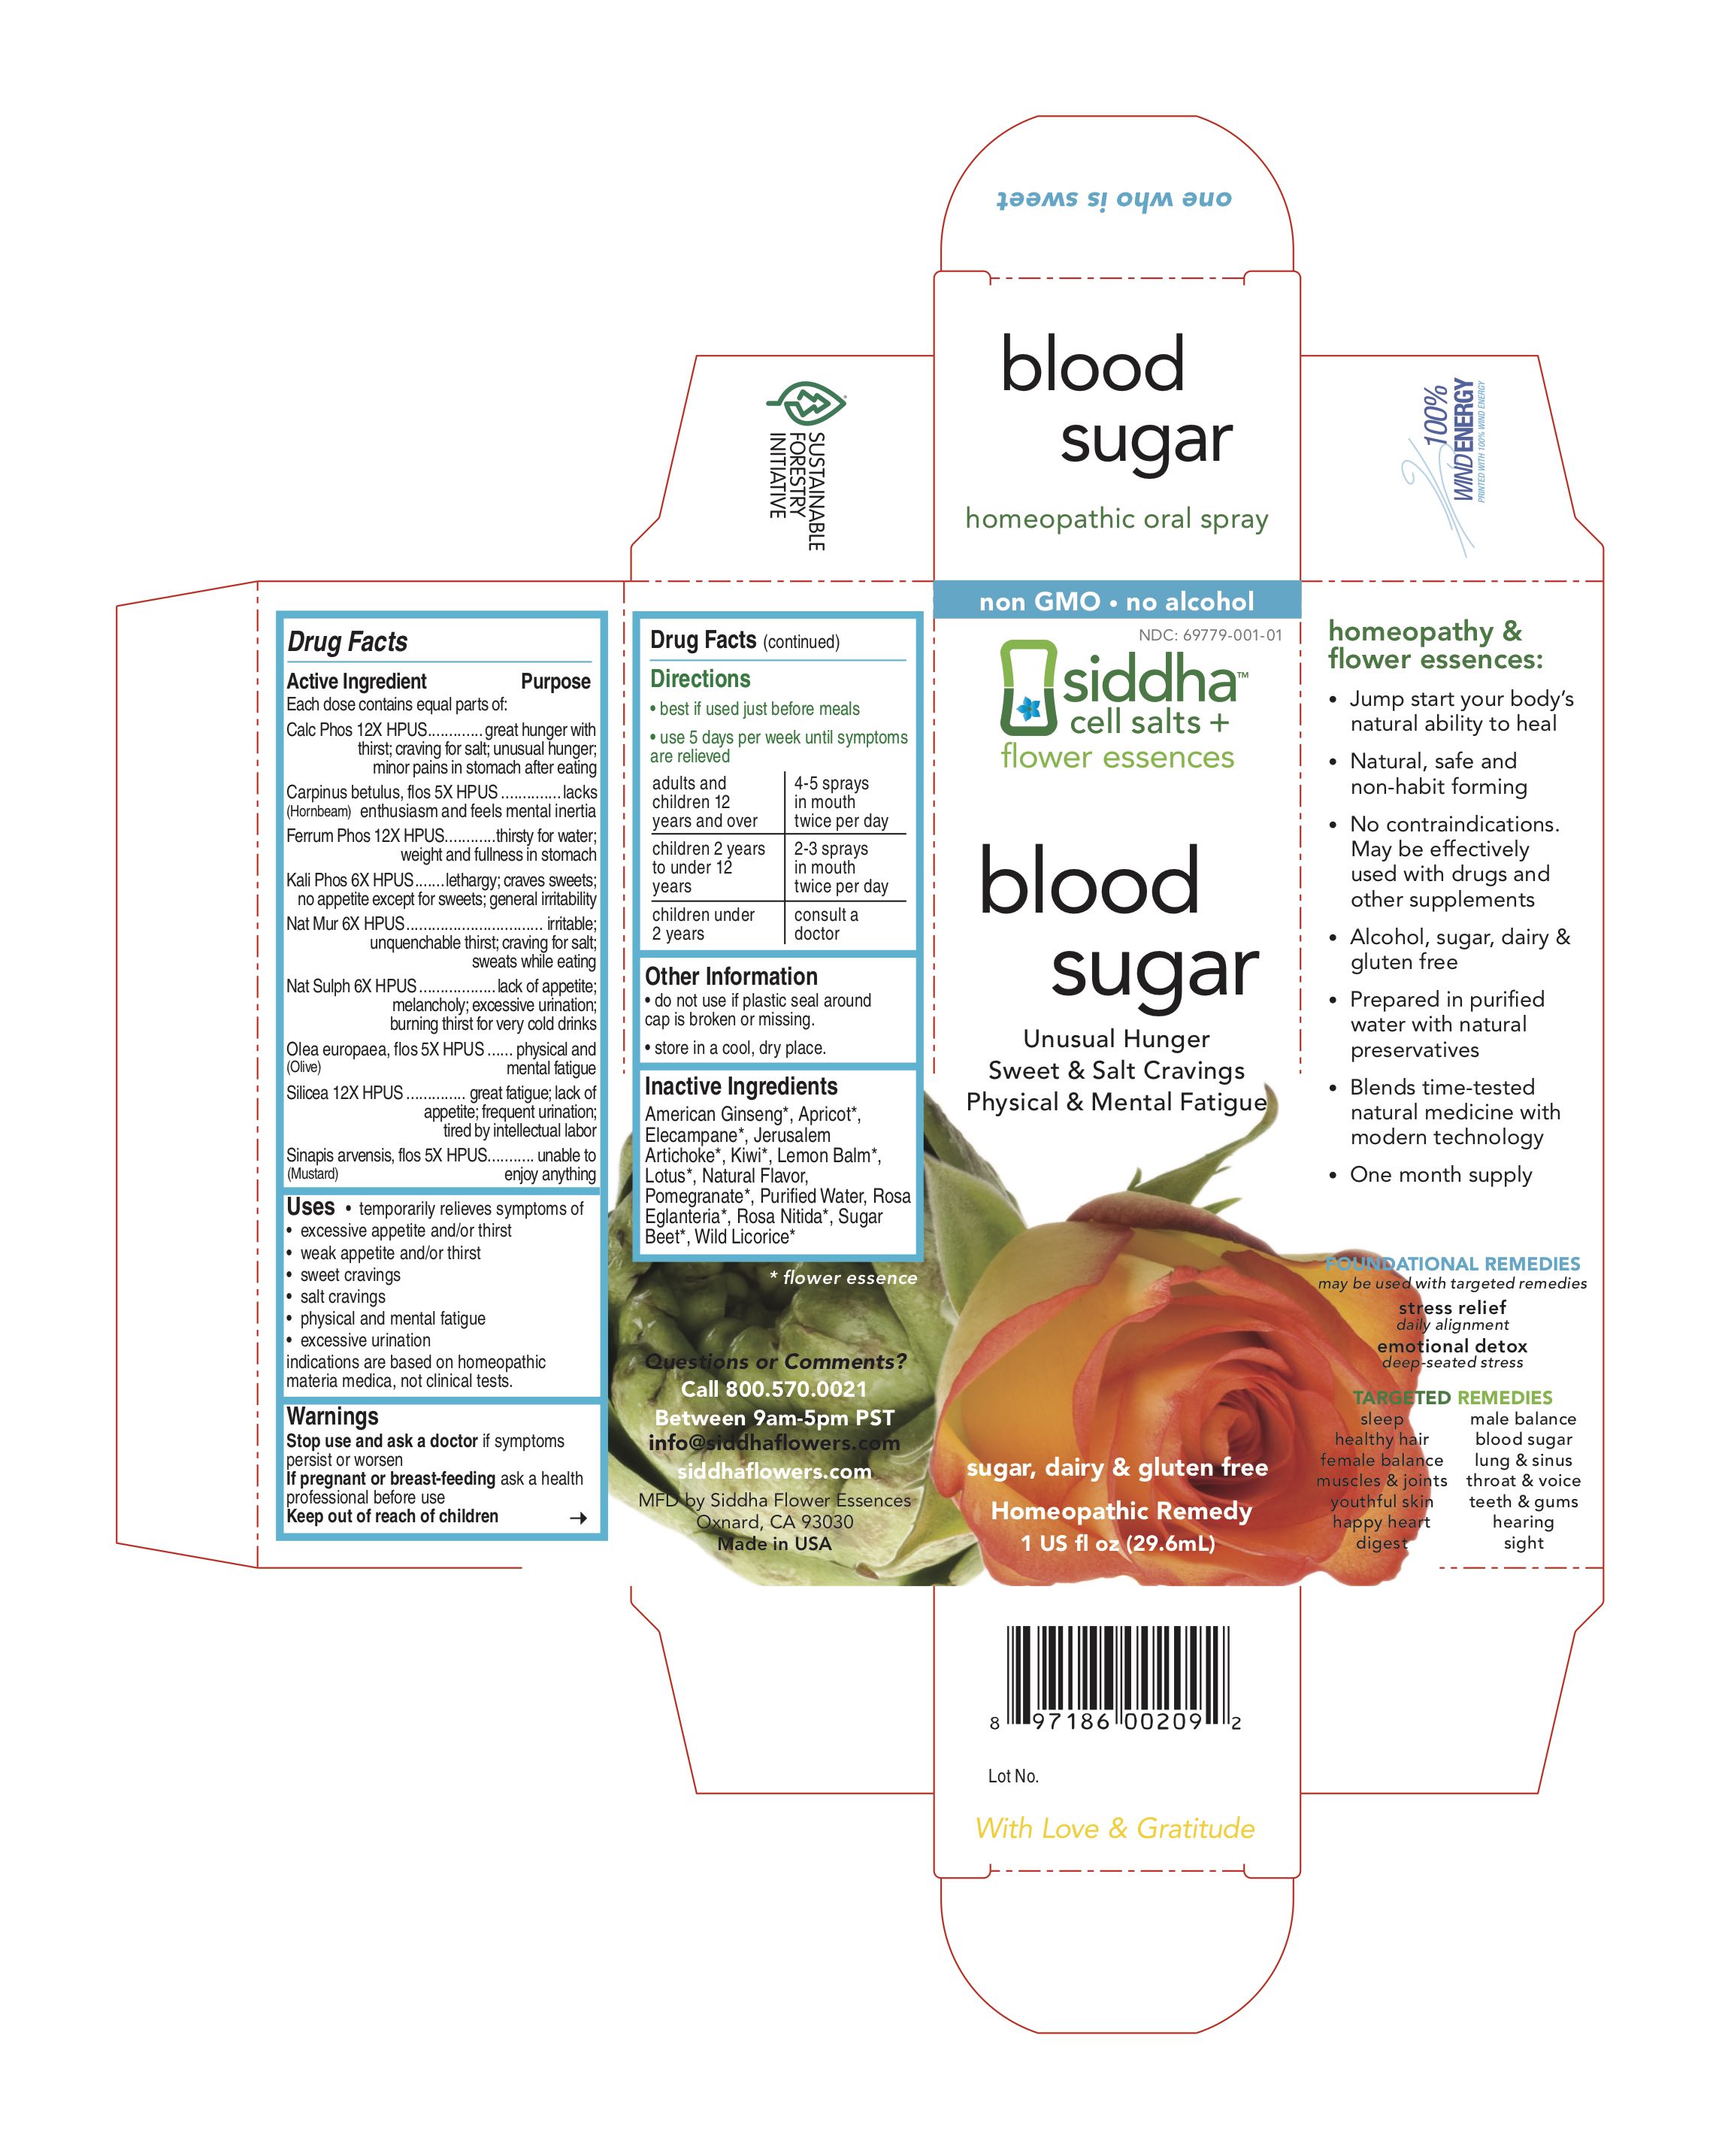 Blood Sugar Carton